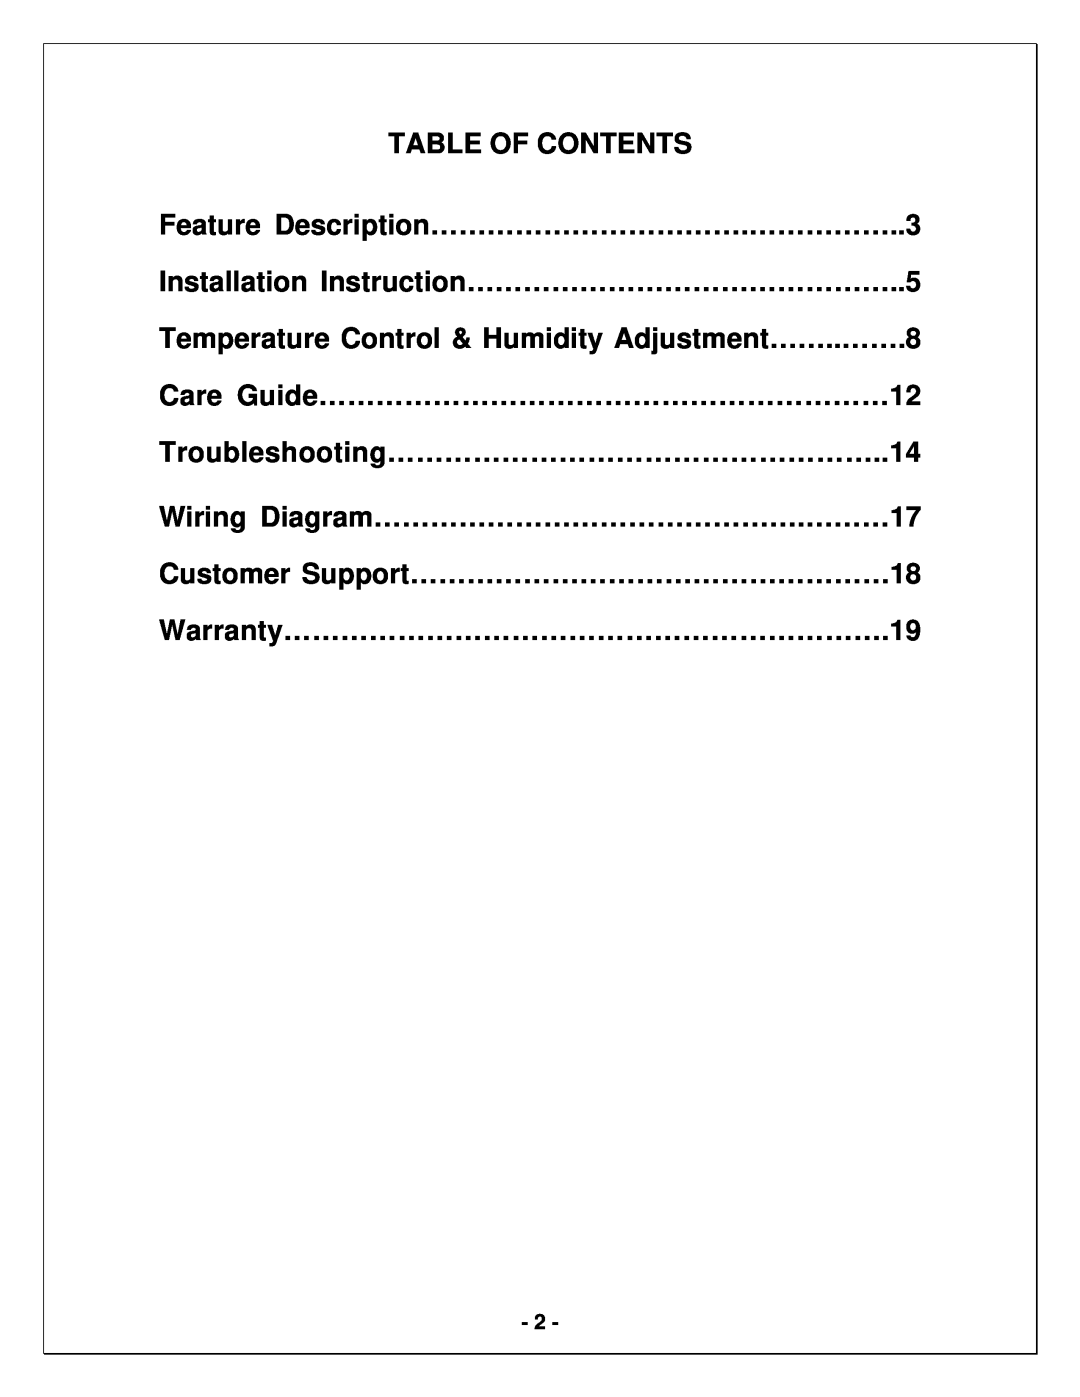 Vinotemp WM1500 HTD-TE manual Table Of Contents, Feature Description…………………………….……………..3, Care Guide……………………………………………………12 